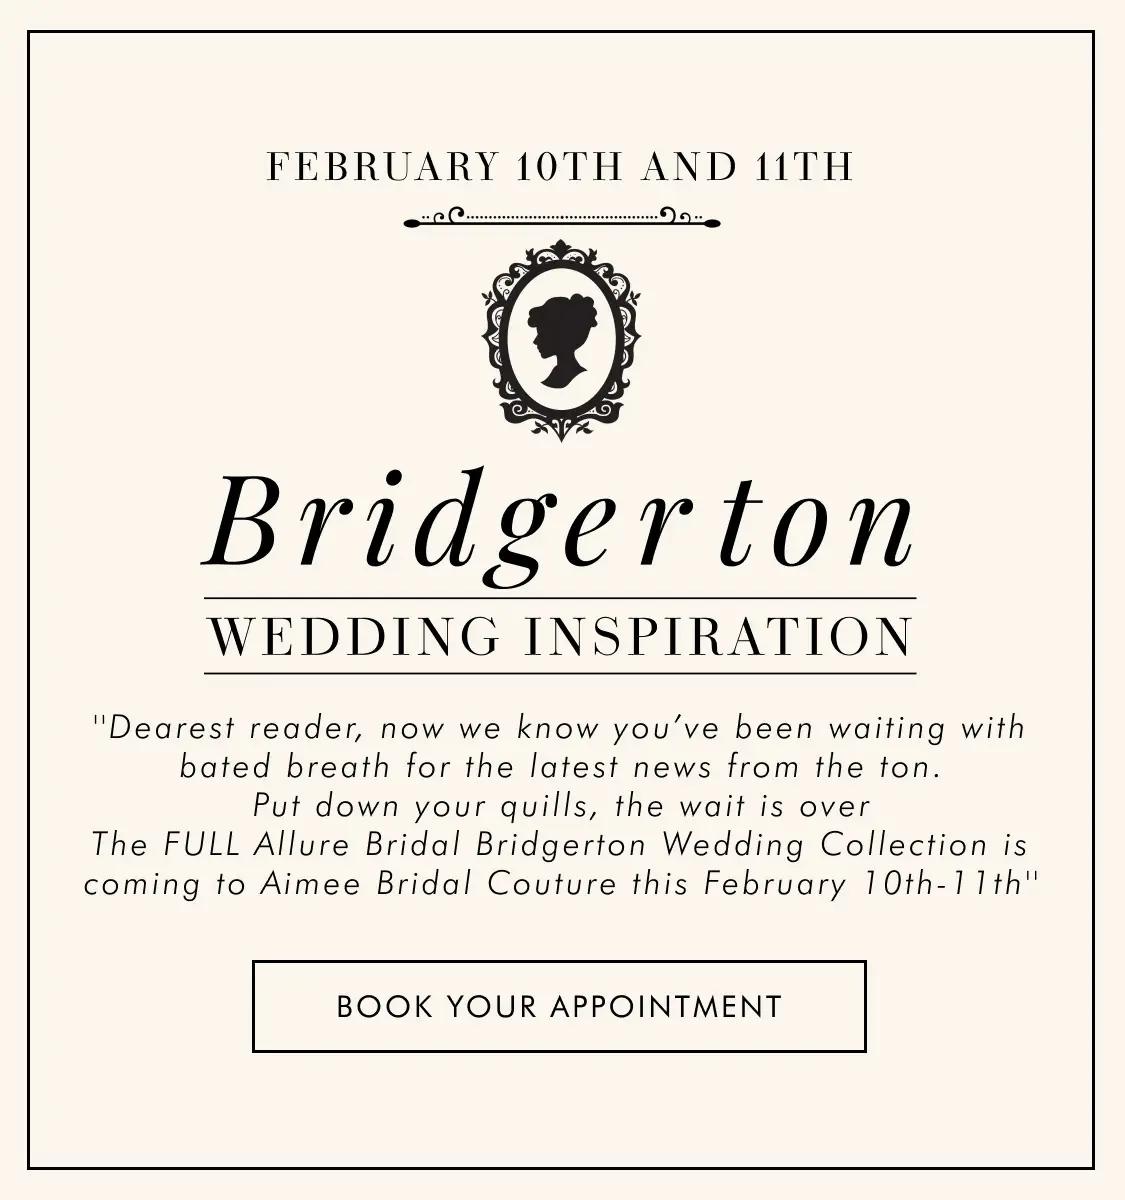 BRIDGERTON Wedding Inspiration